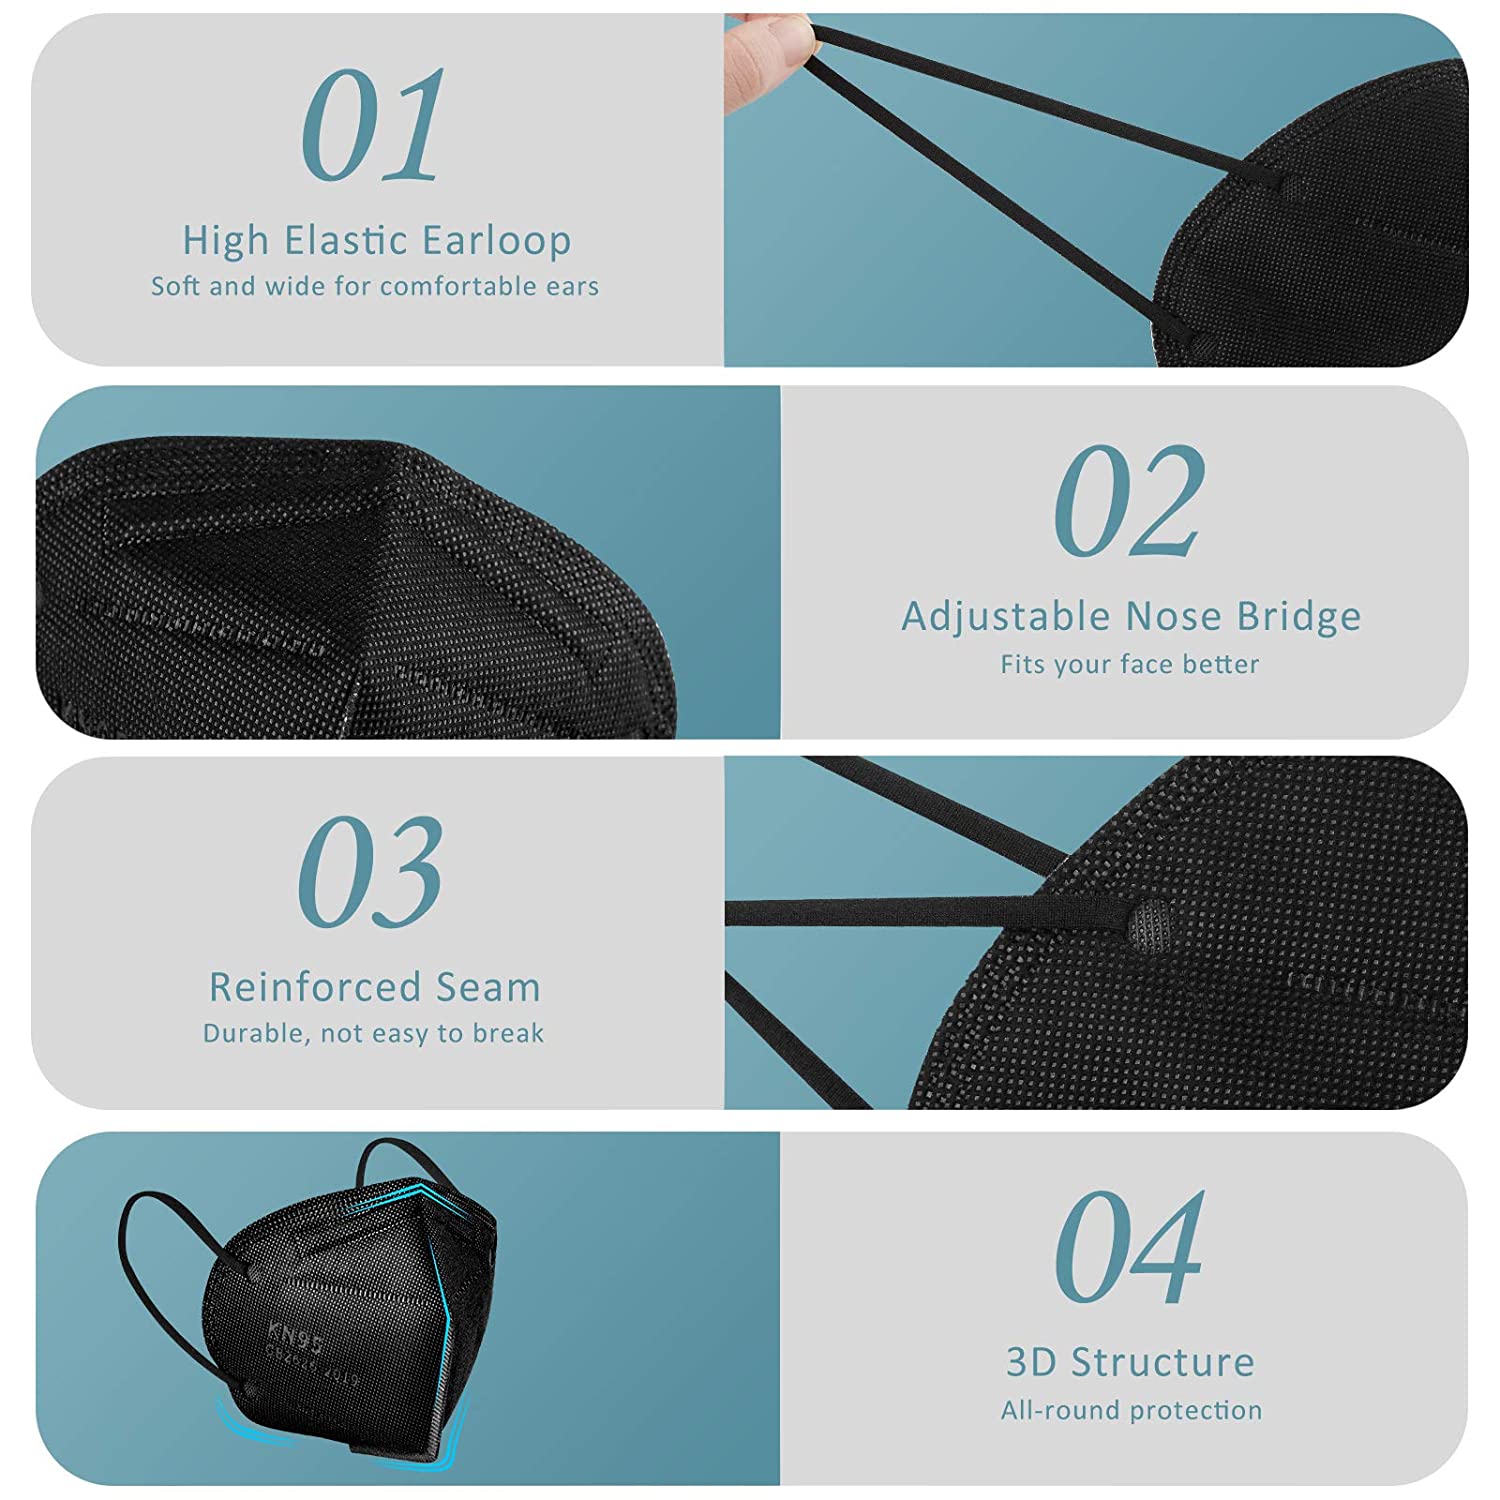 Black KN95 Face Mask 20 PCs- Filter Efficiency≥95%, Breathable Protection Masks Against PM2.5